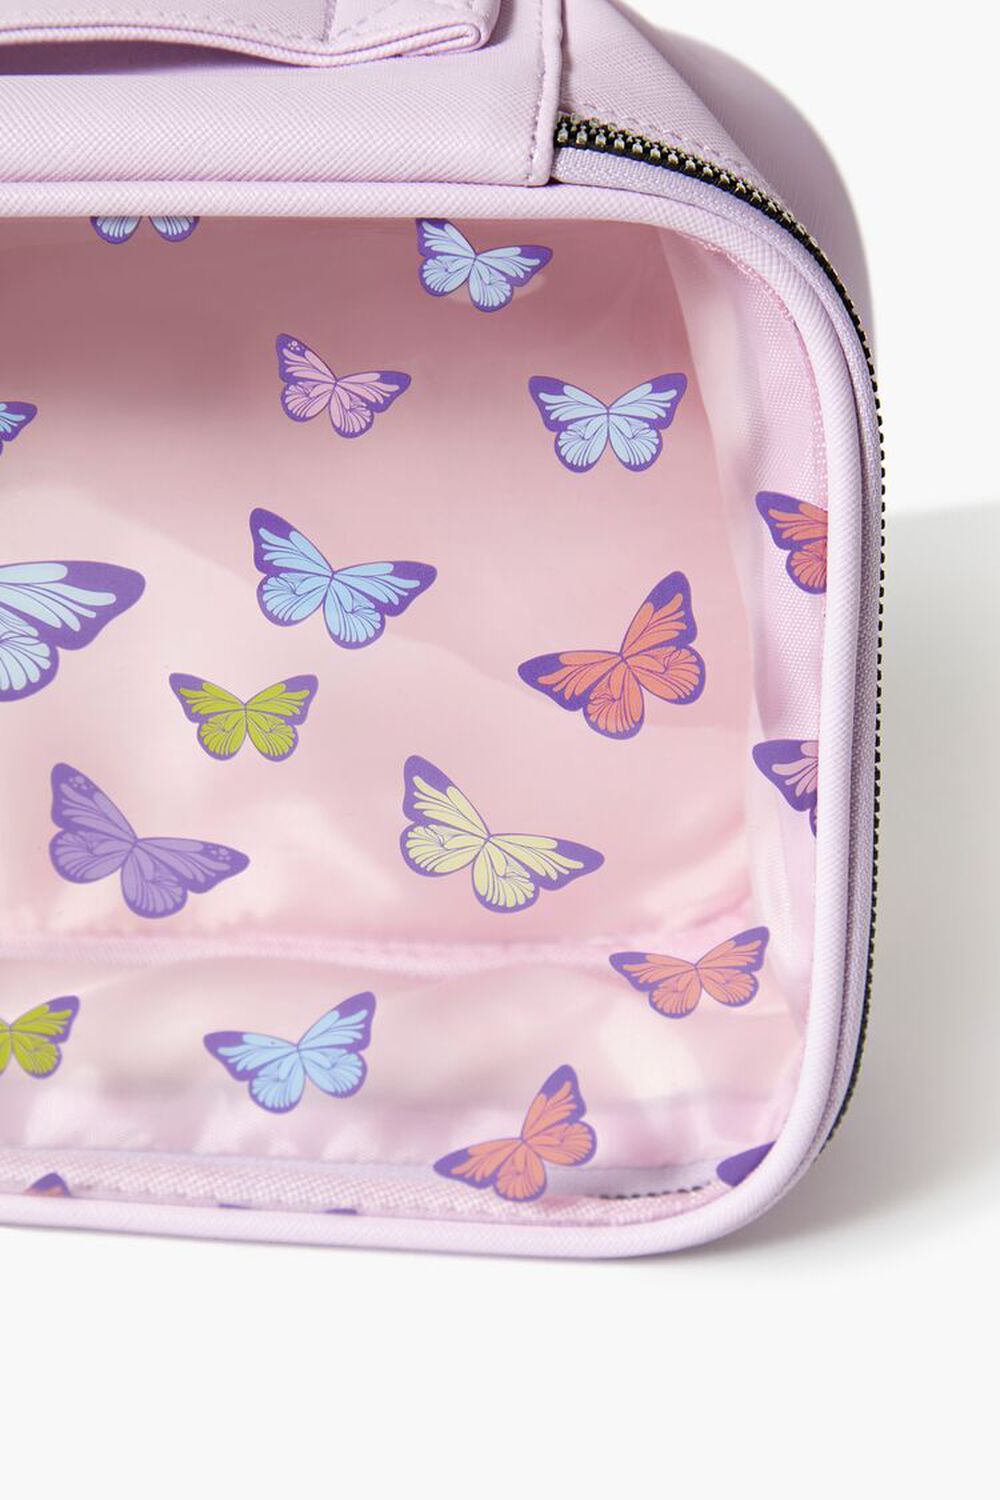 SHEIN, Bags, Shein Mini Backpack In Black White Butterfly Print